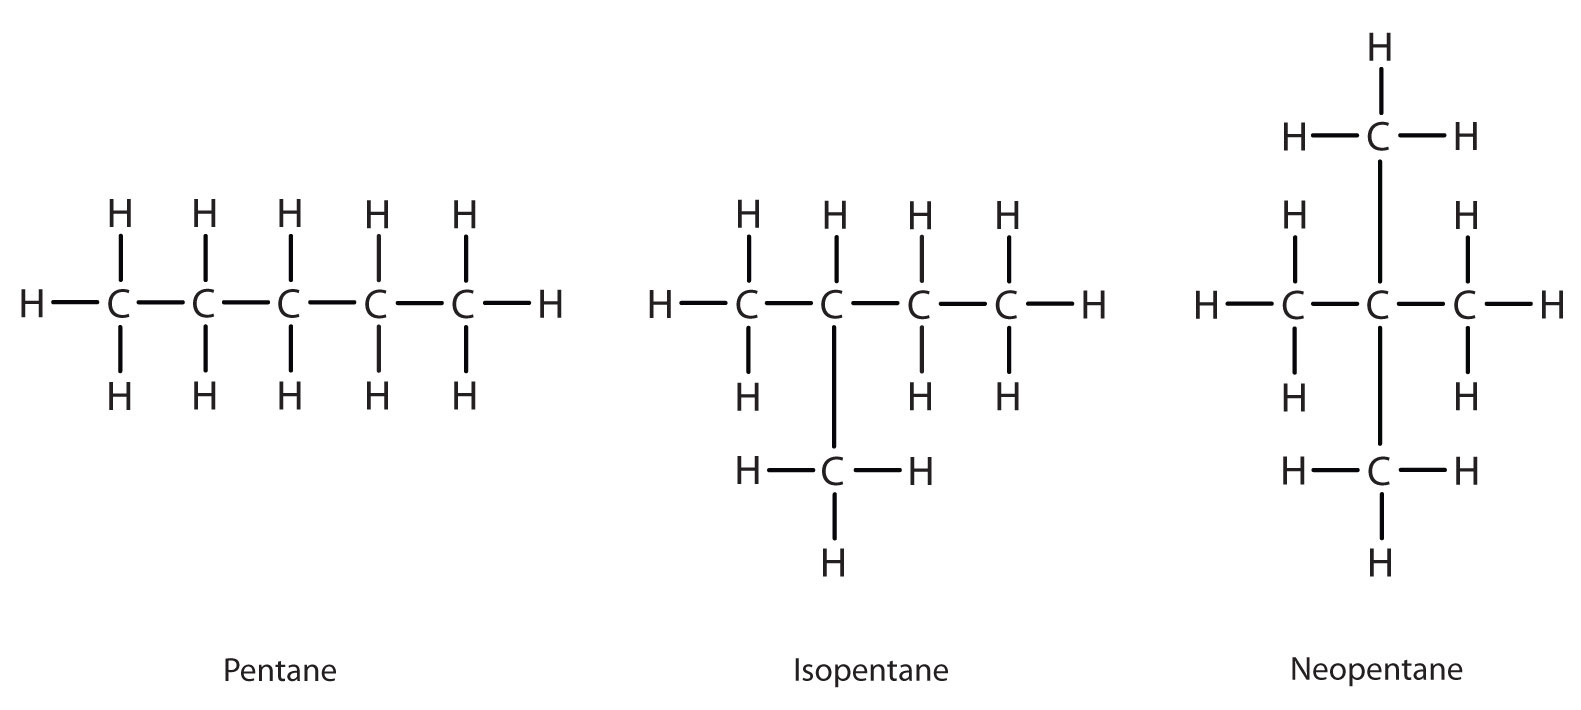 Three 5-Carbon alkane isomers: Pentane, Isopentane (2-Methyl-butane) and Neopentane (2,2 Dimethyl-propane). 